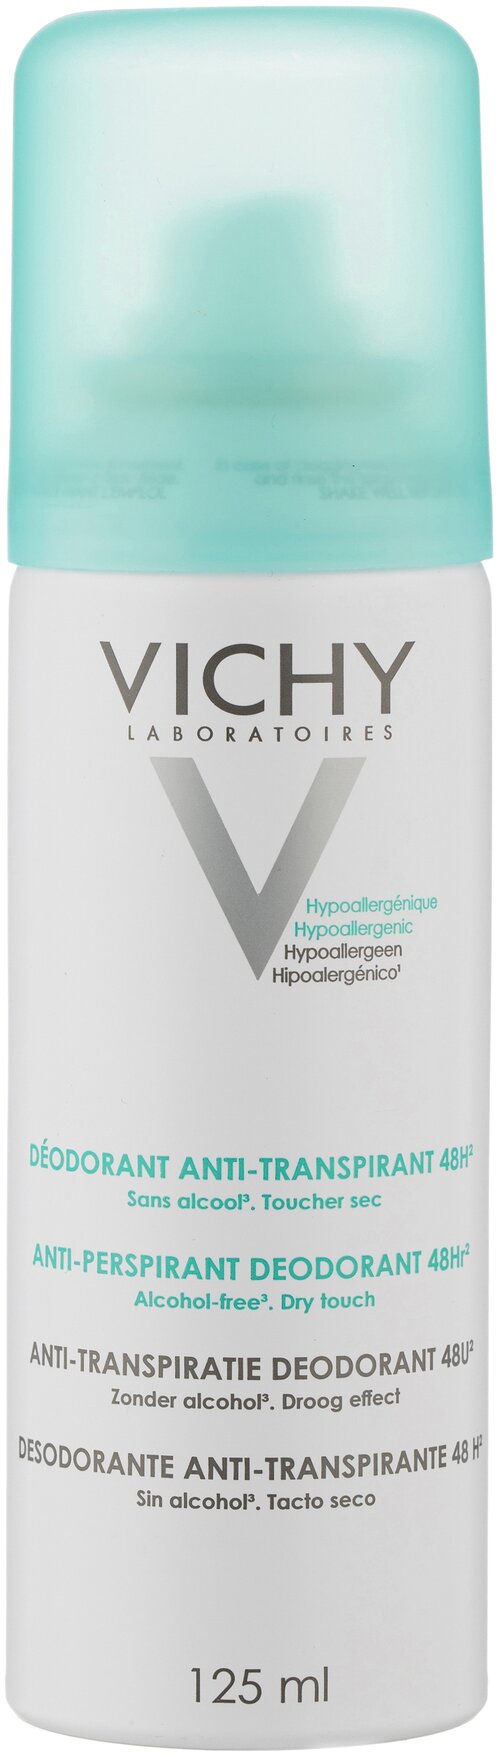 Vichy Дезодорант-антиперспирант регулирующий избыточное потоотделение, спрей, флакон, 125 мл, 125 г